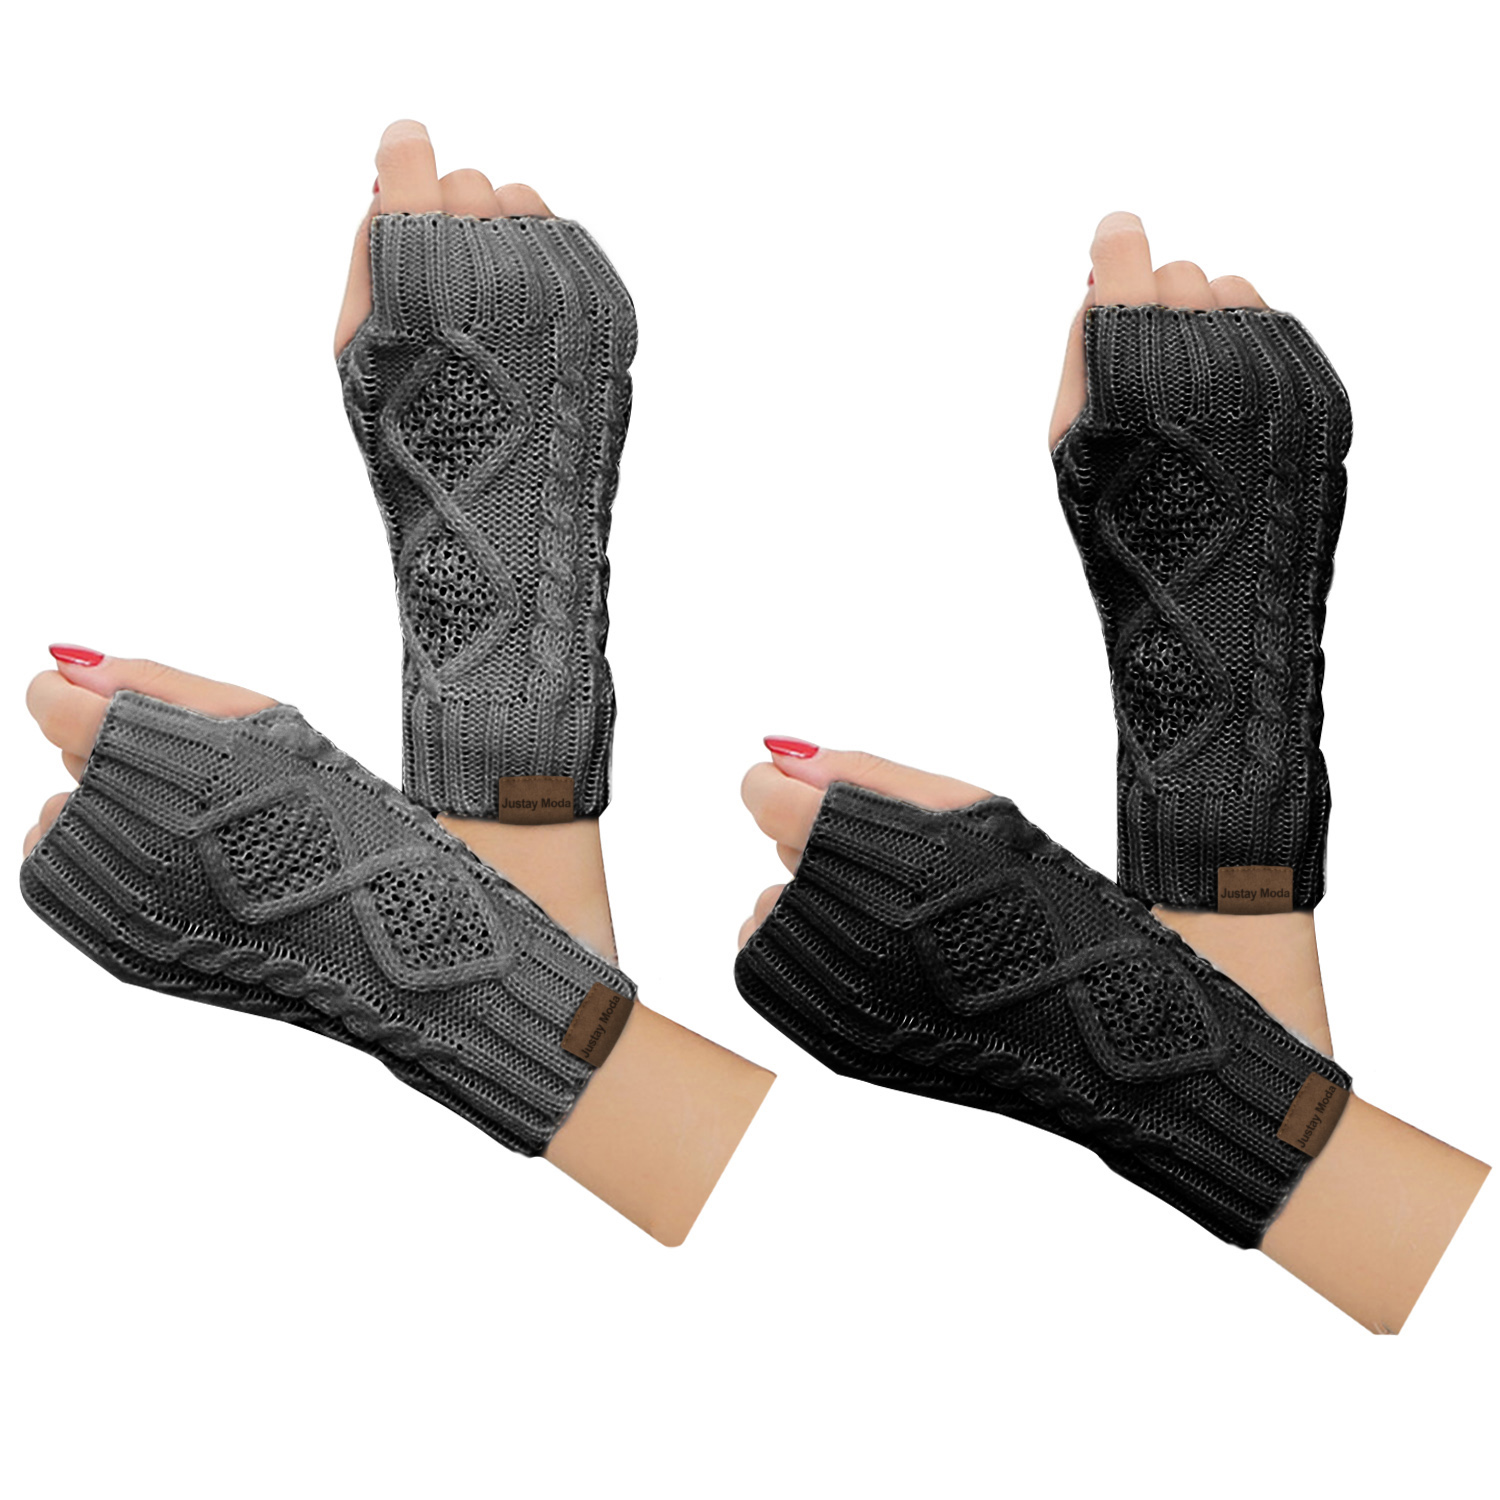 Justay Moda Womens Fingerless Gloves Winter Warm Knit Arm Warmers Mittens